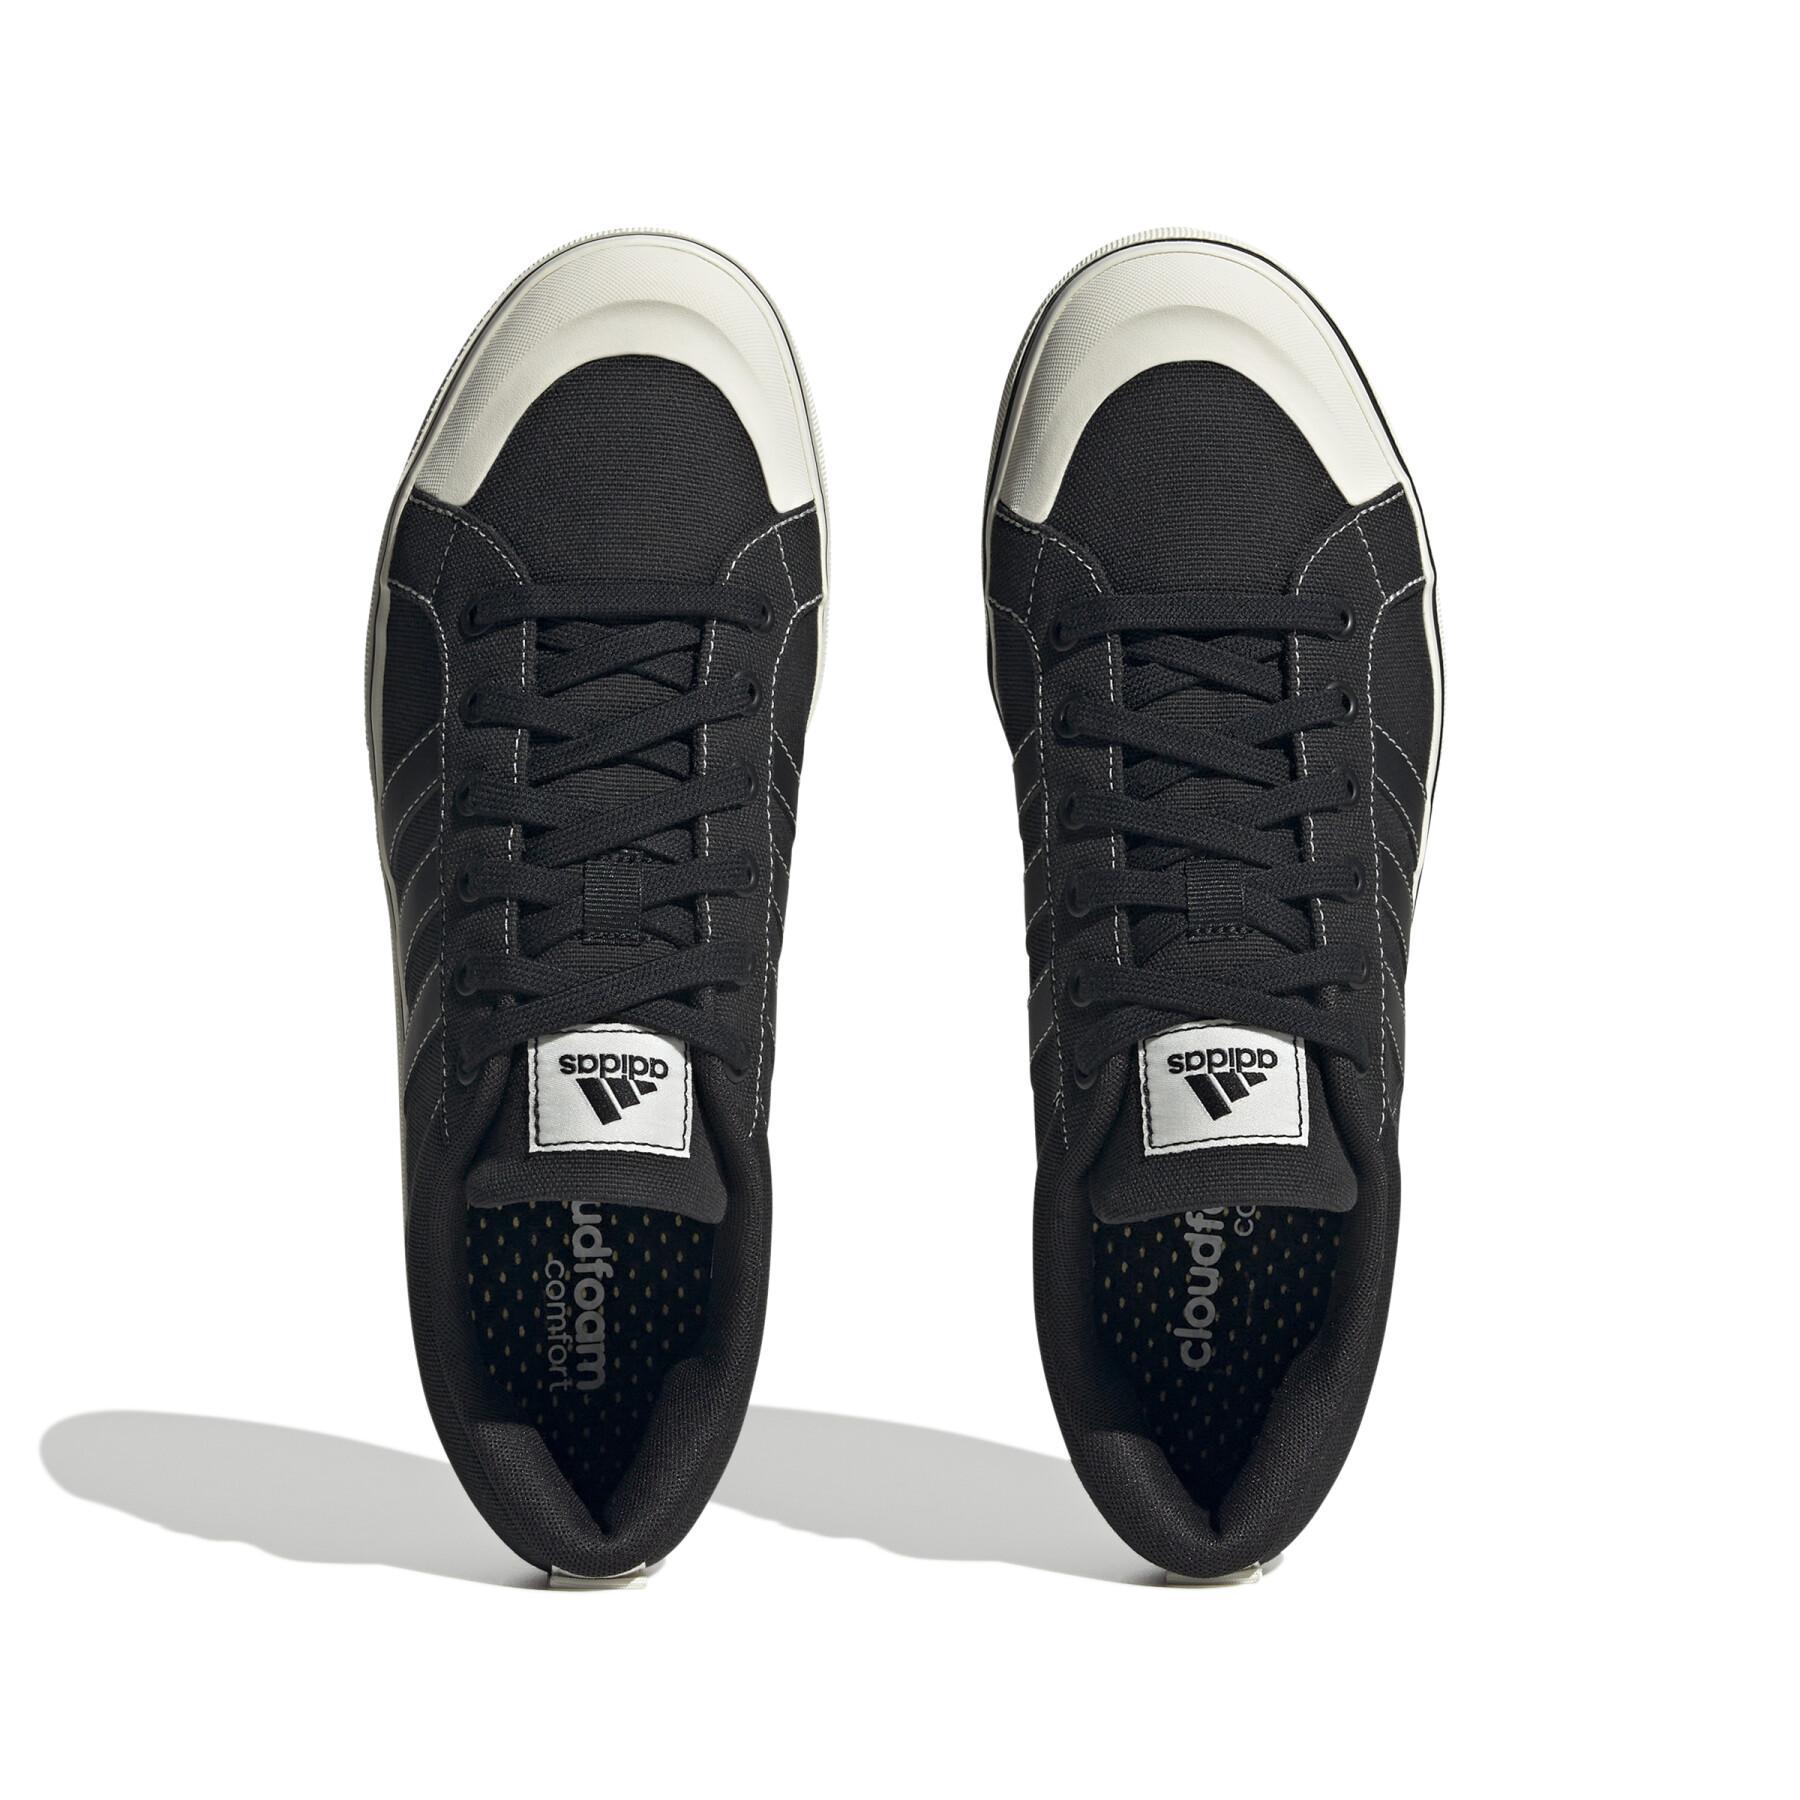 Canvas sneakers adidas Bravada 2.0 - adidas - Men's Sneakers - Lifestyle